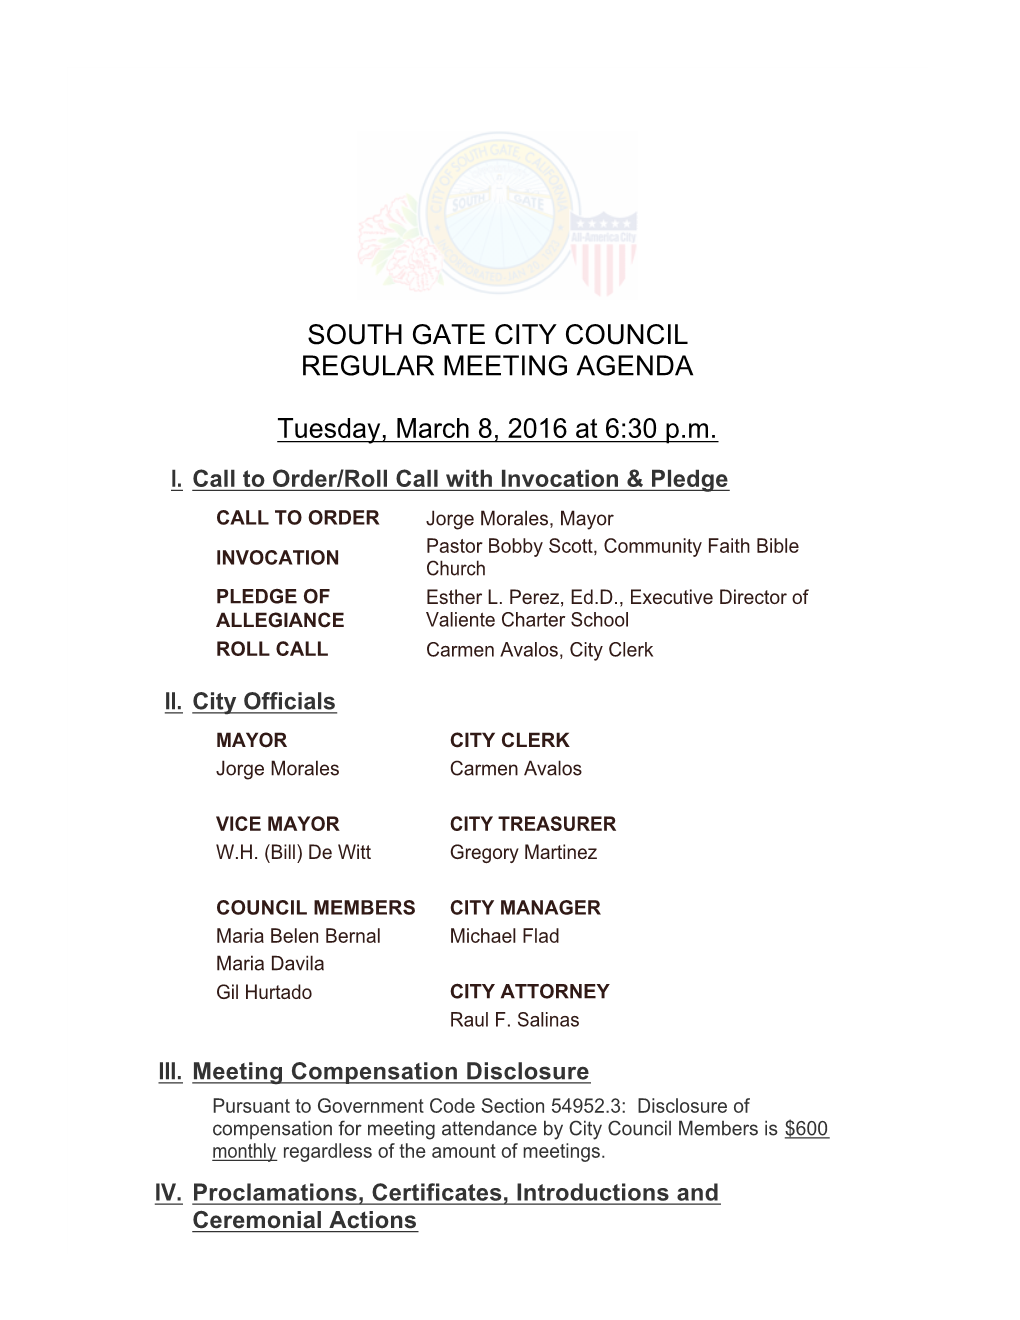 South Gate City Council Regular Meeting Agenda